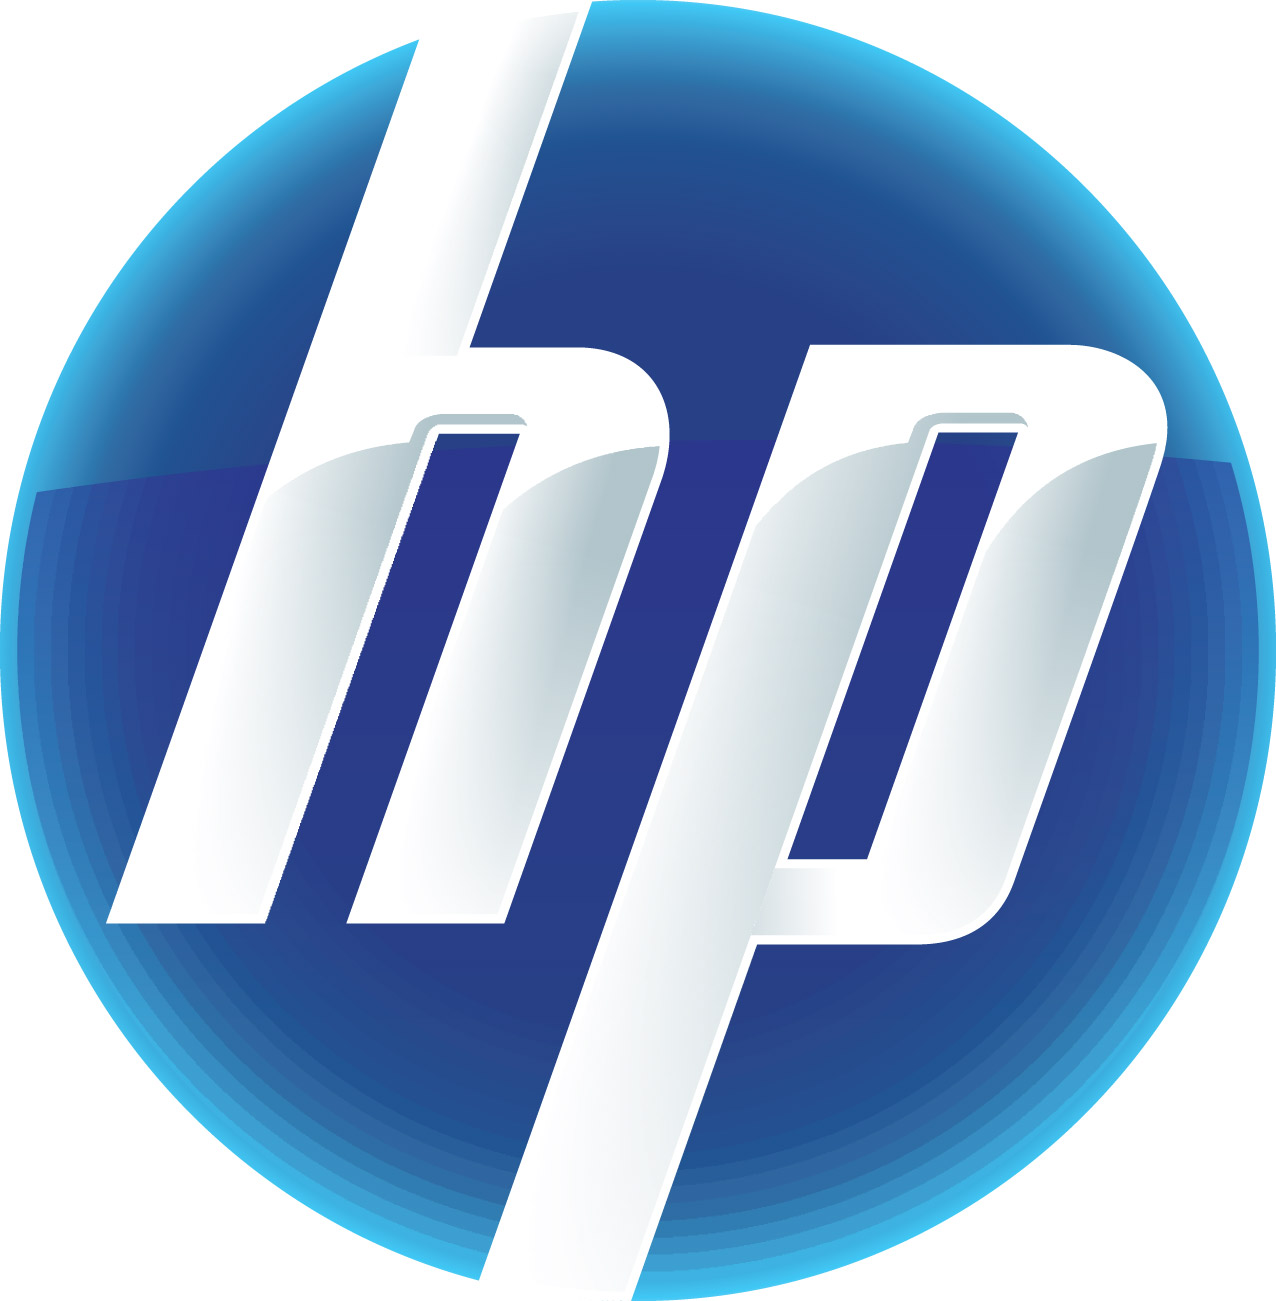 Creative Pin - A Graphic Design Resource: Hewlett Packard New Logo